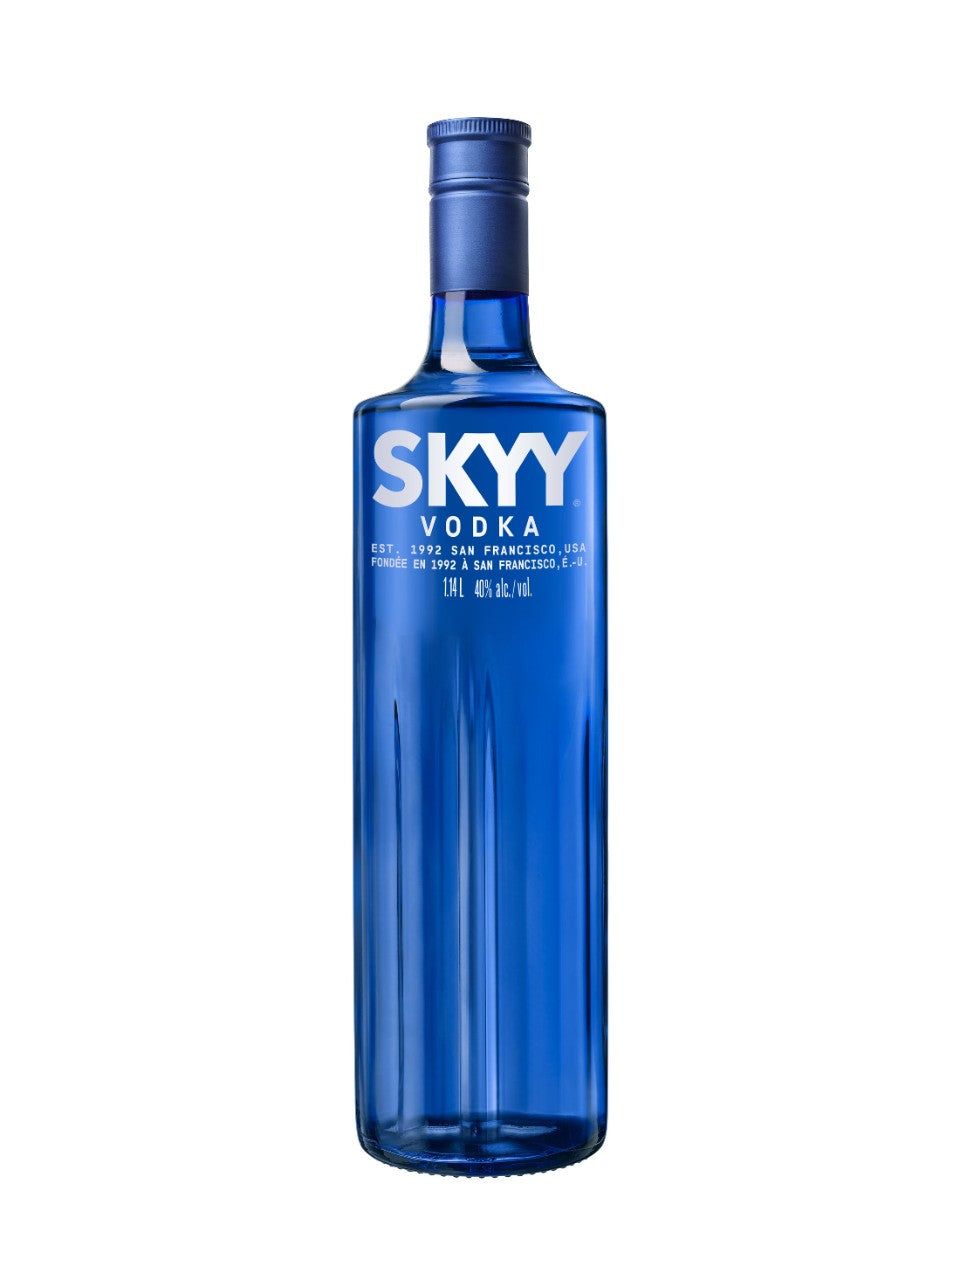 Skyy Vodka 1140 mL bottle